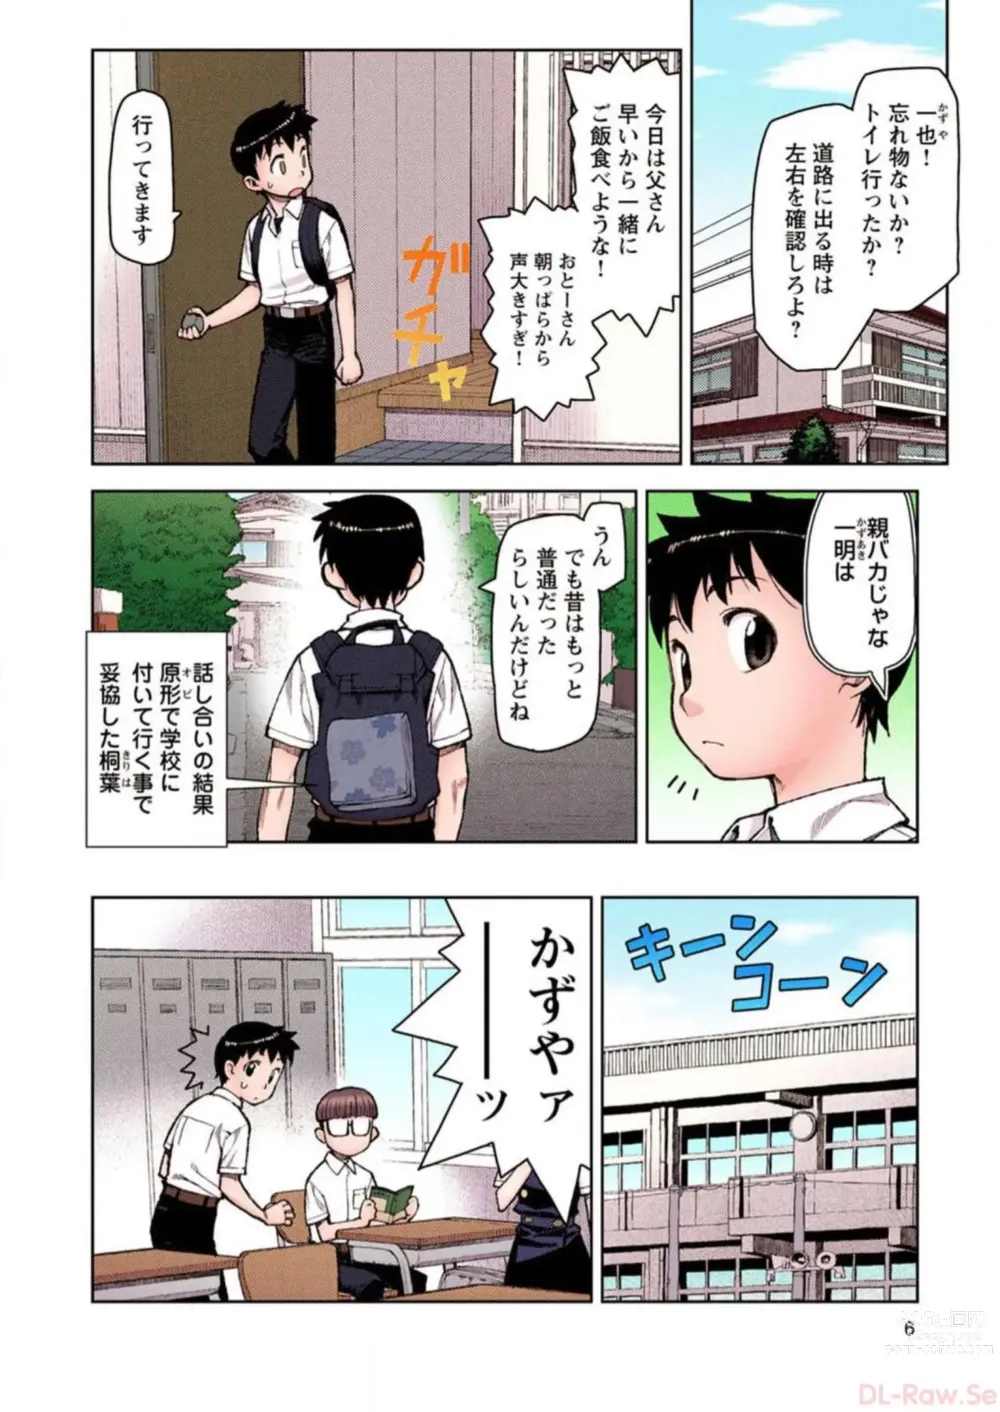 Page 6 of manga Tsugumomo Digital Colored Comics V2